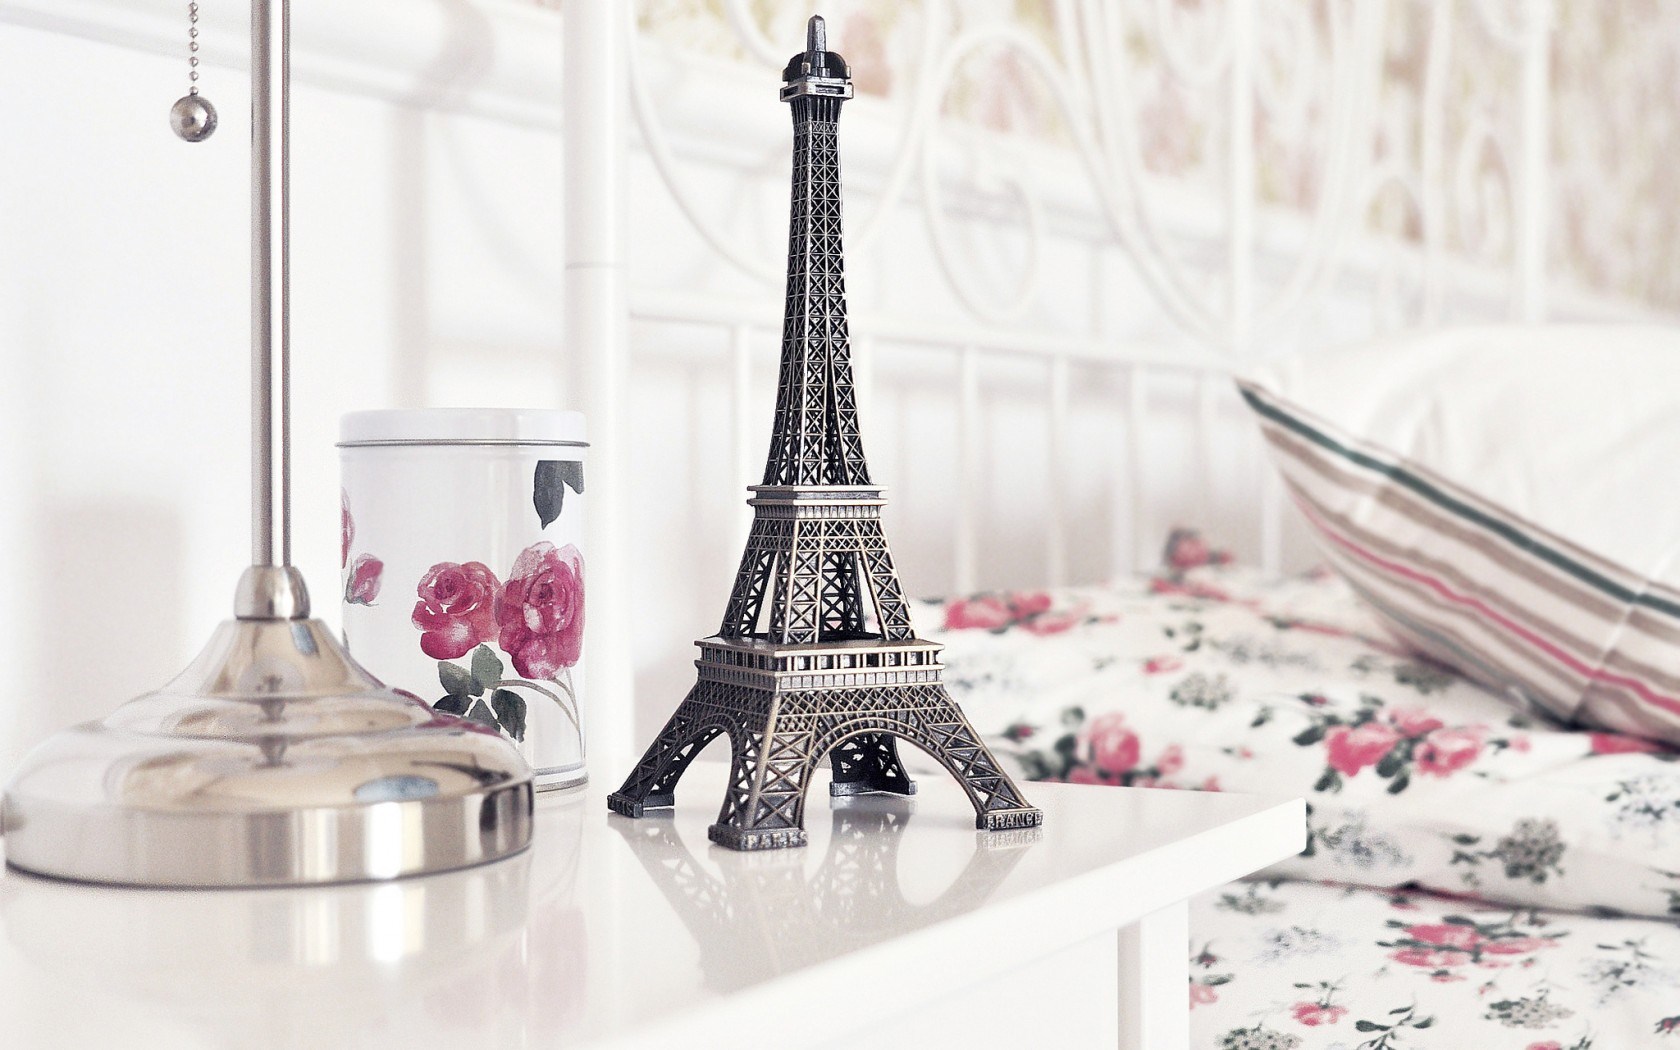 47+] Eiffel Tower Cute Wallpaper - WallpaperSafari